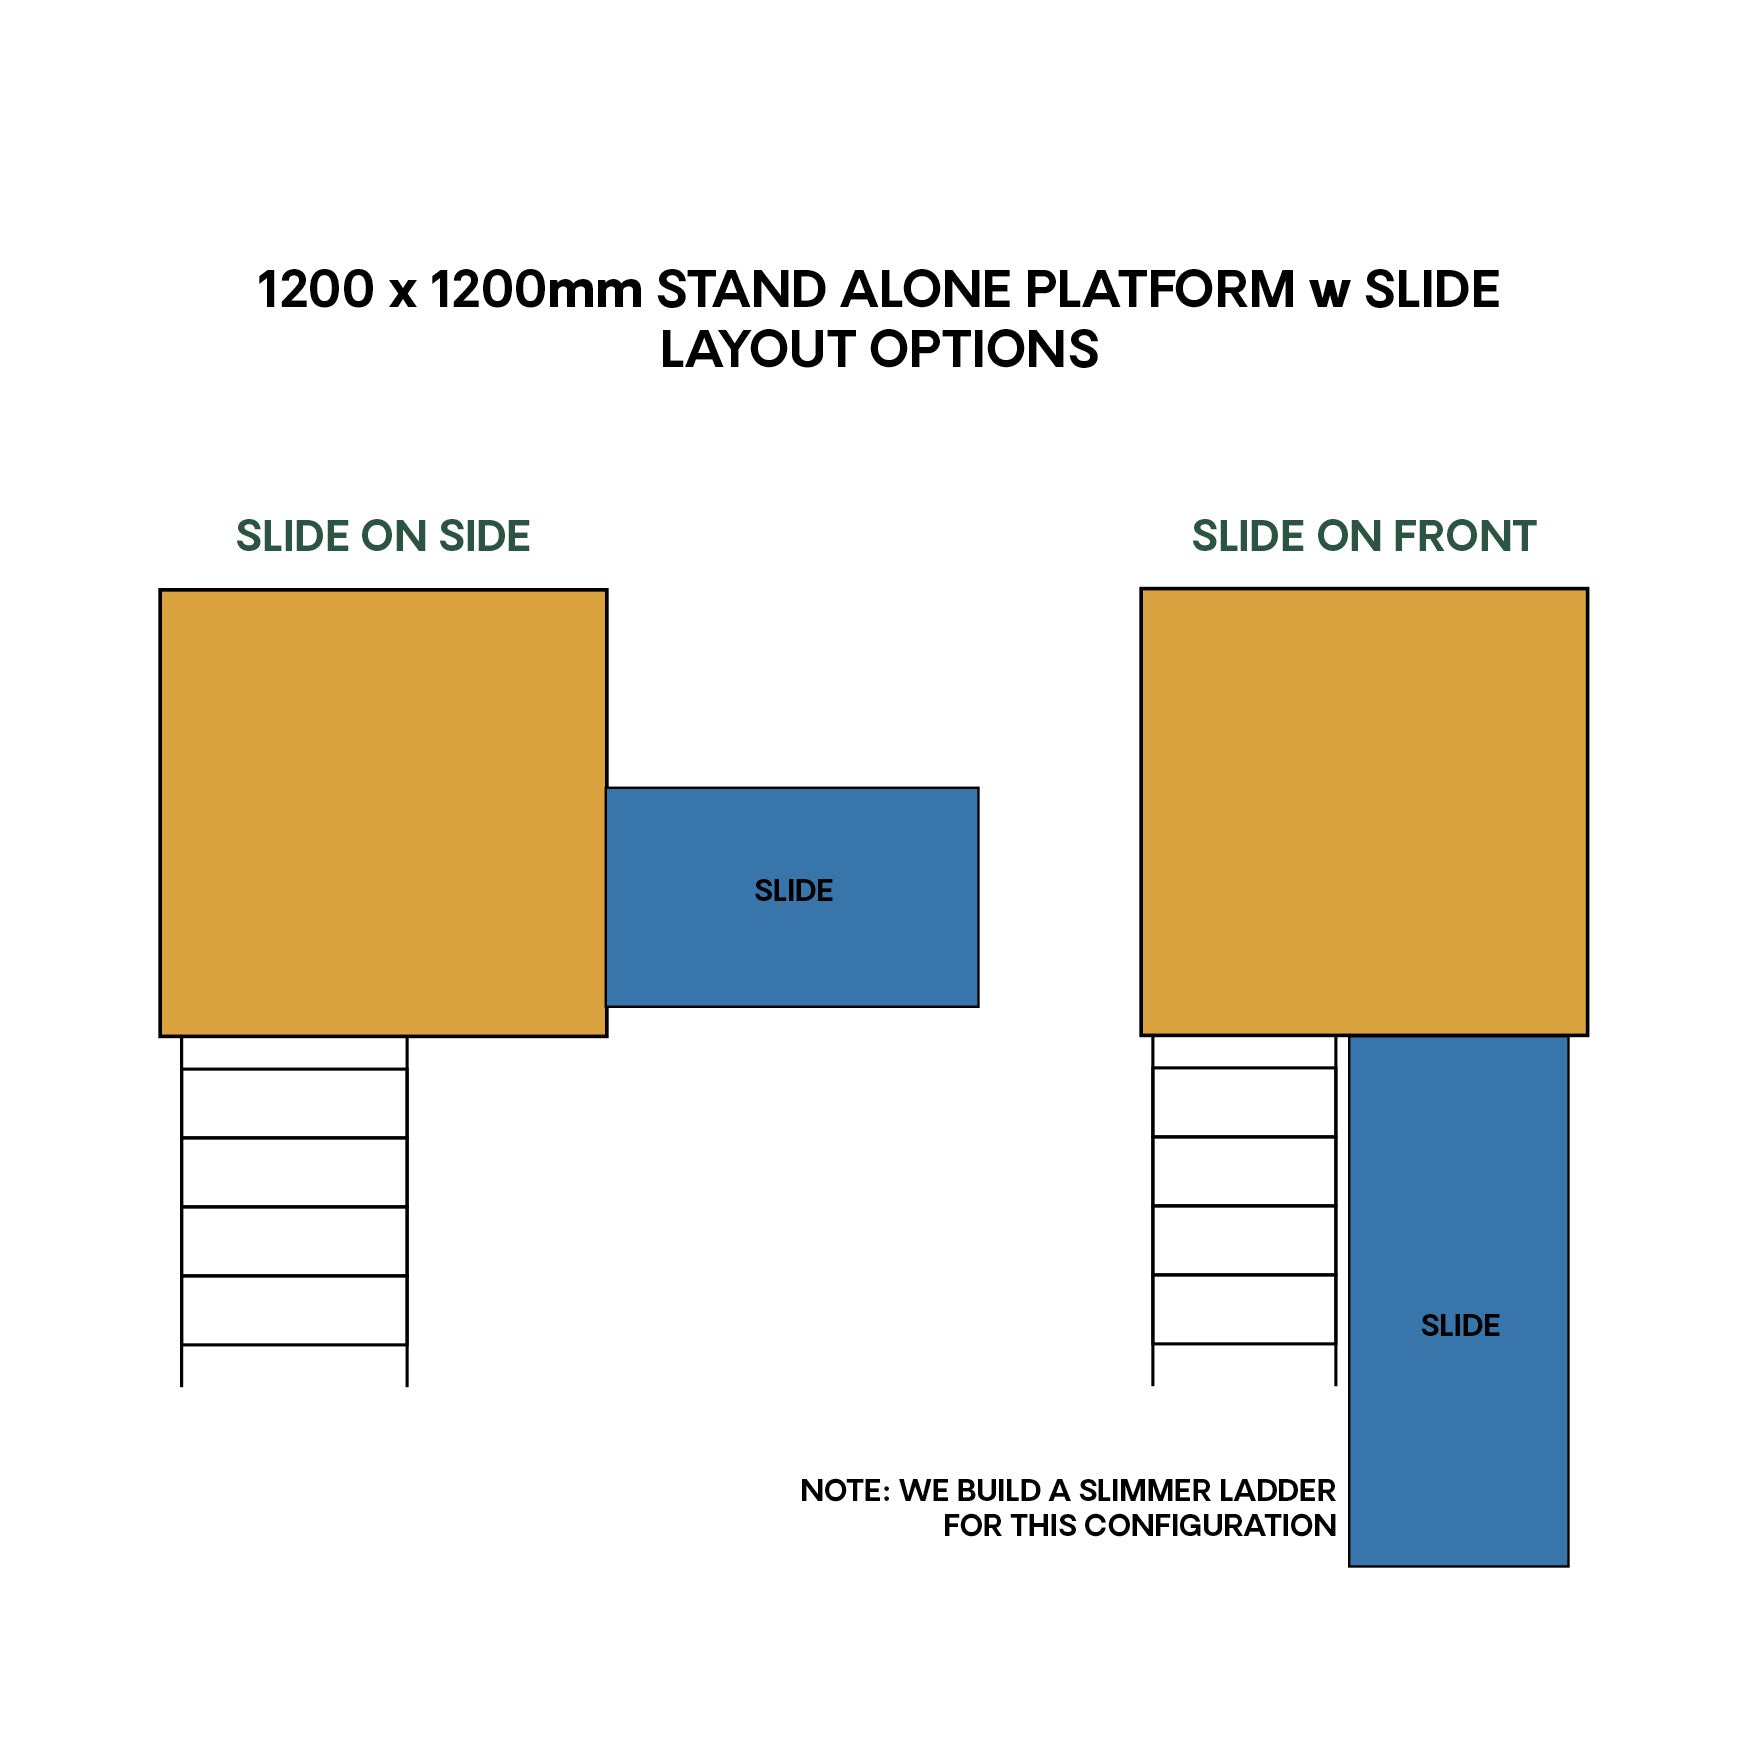 Layout diagram for standalone platform